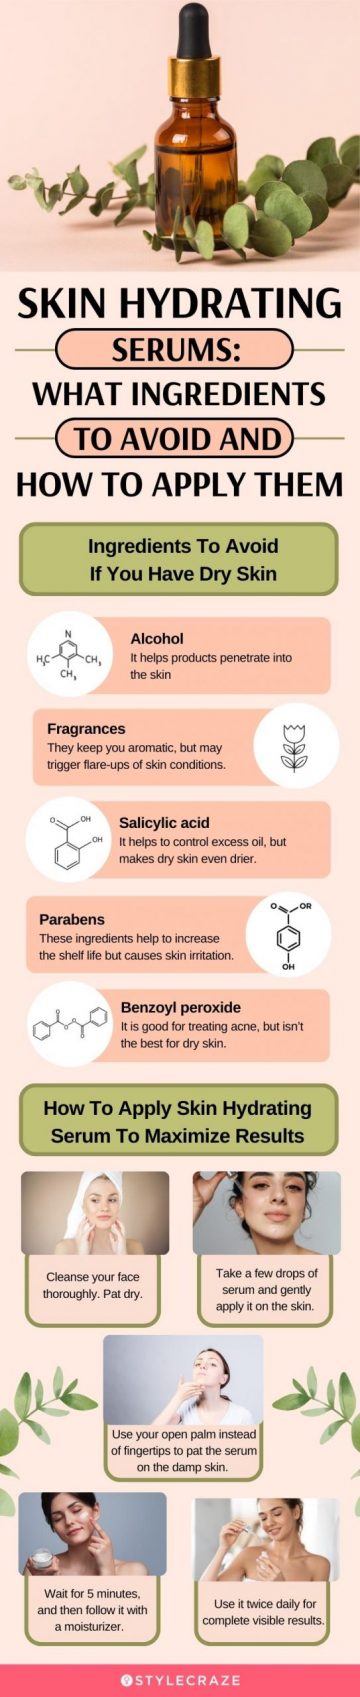 Skin Hydrating Serums